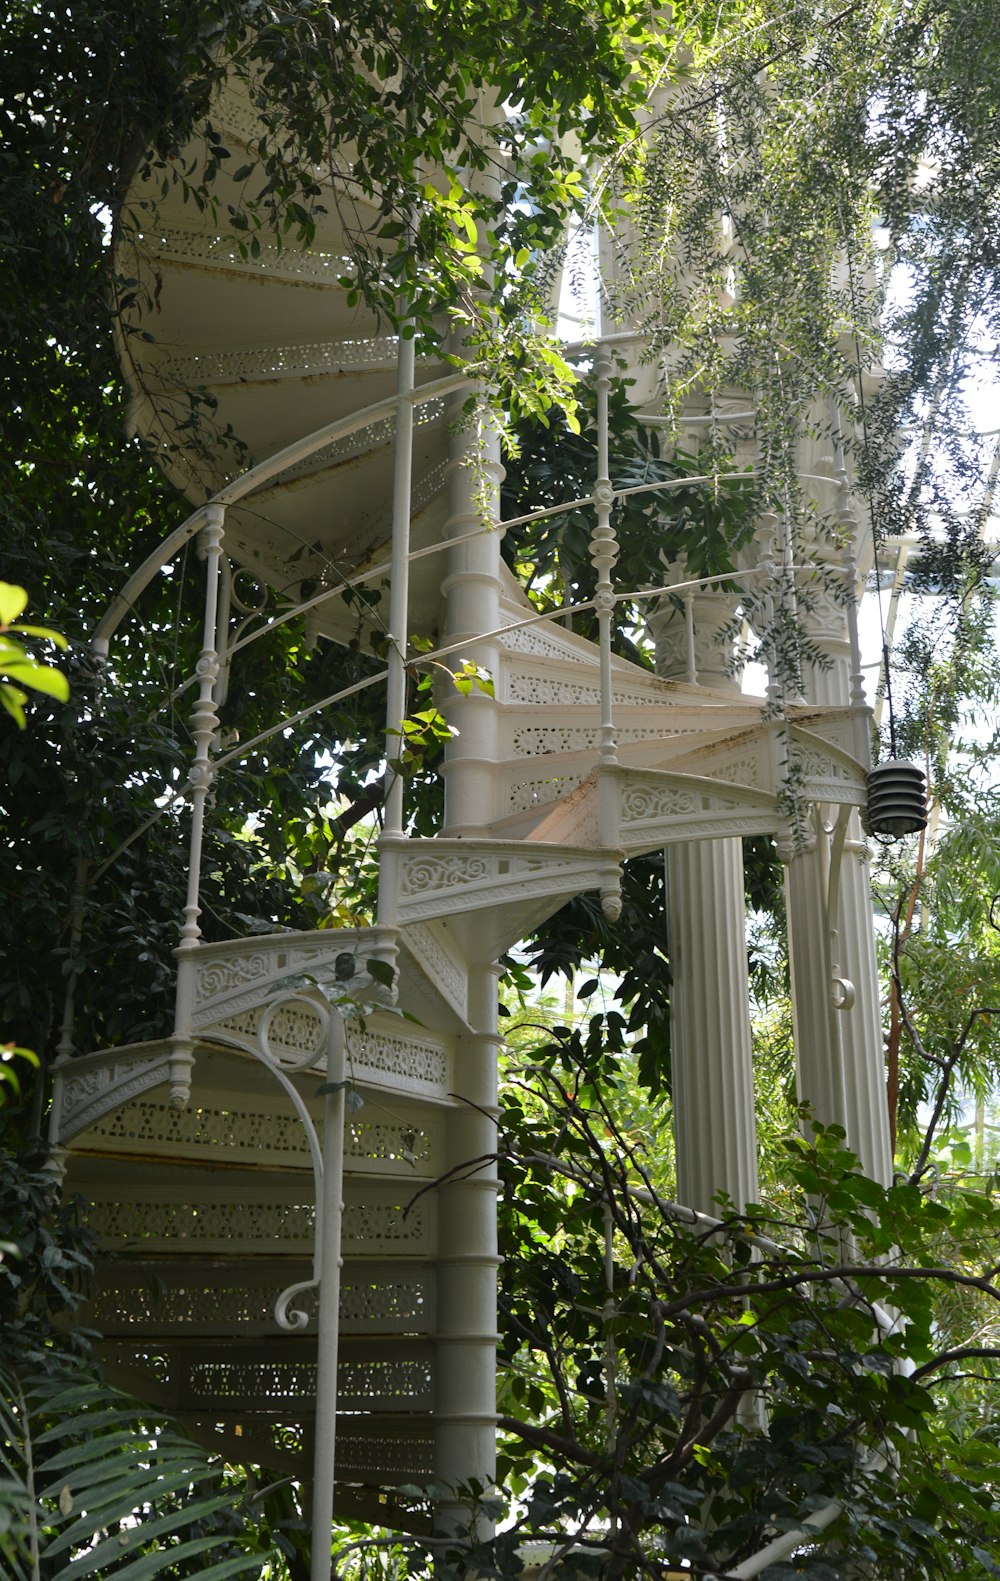 white spiral staircase